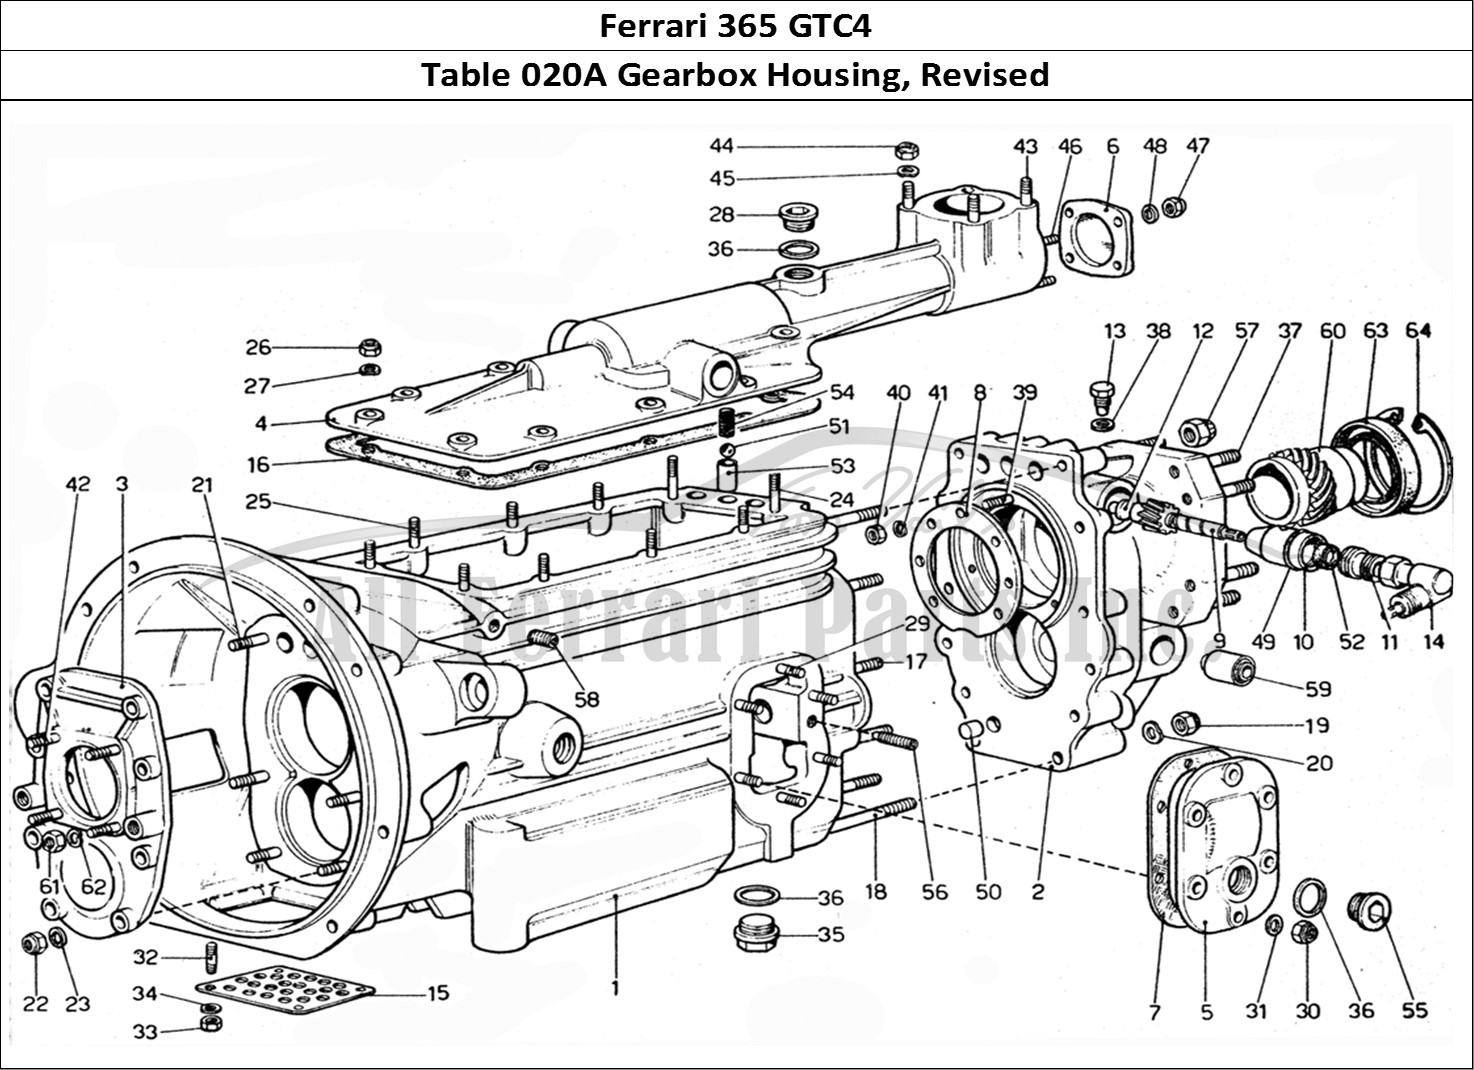 Ferrari Parts Ferrari 365 GTC4 (Mechanical) Page 020 Gearbox casing - Revision